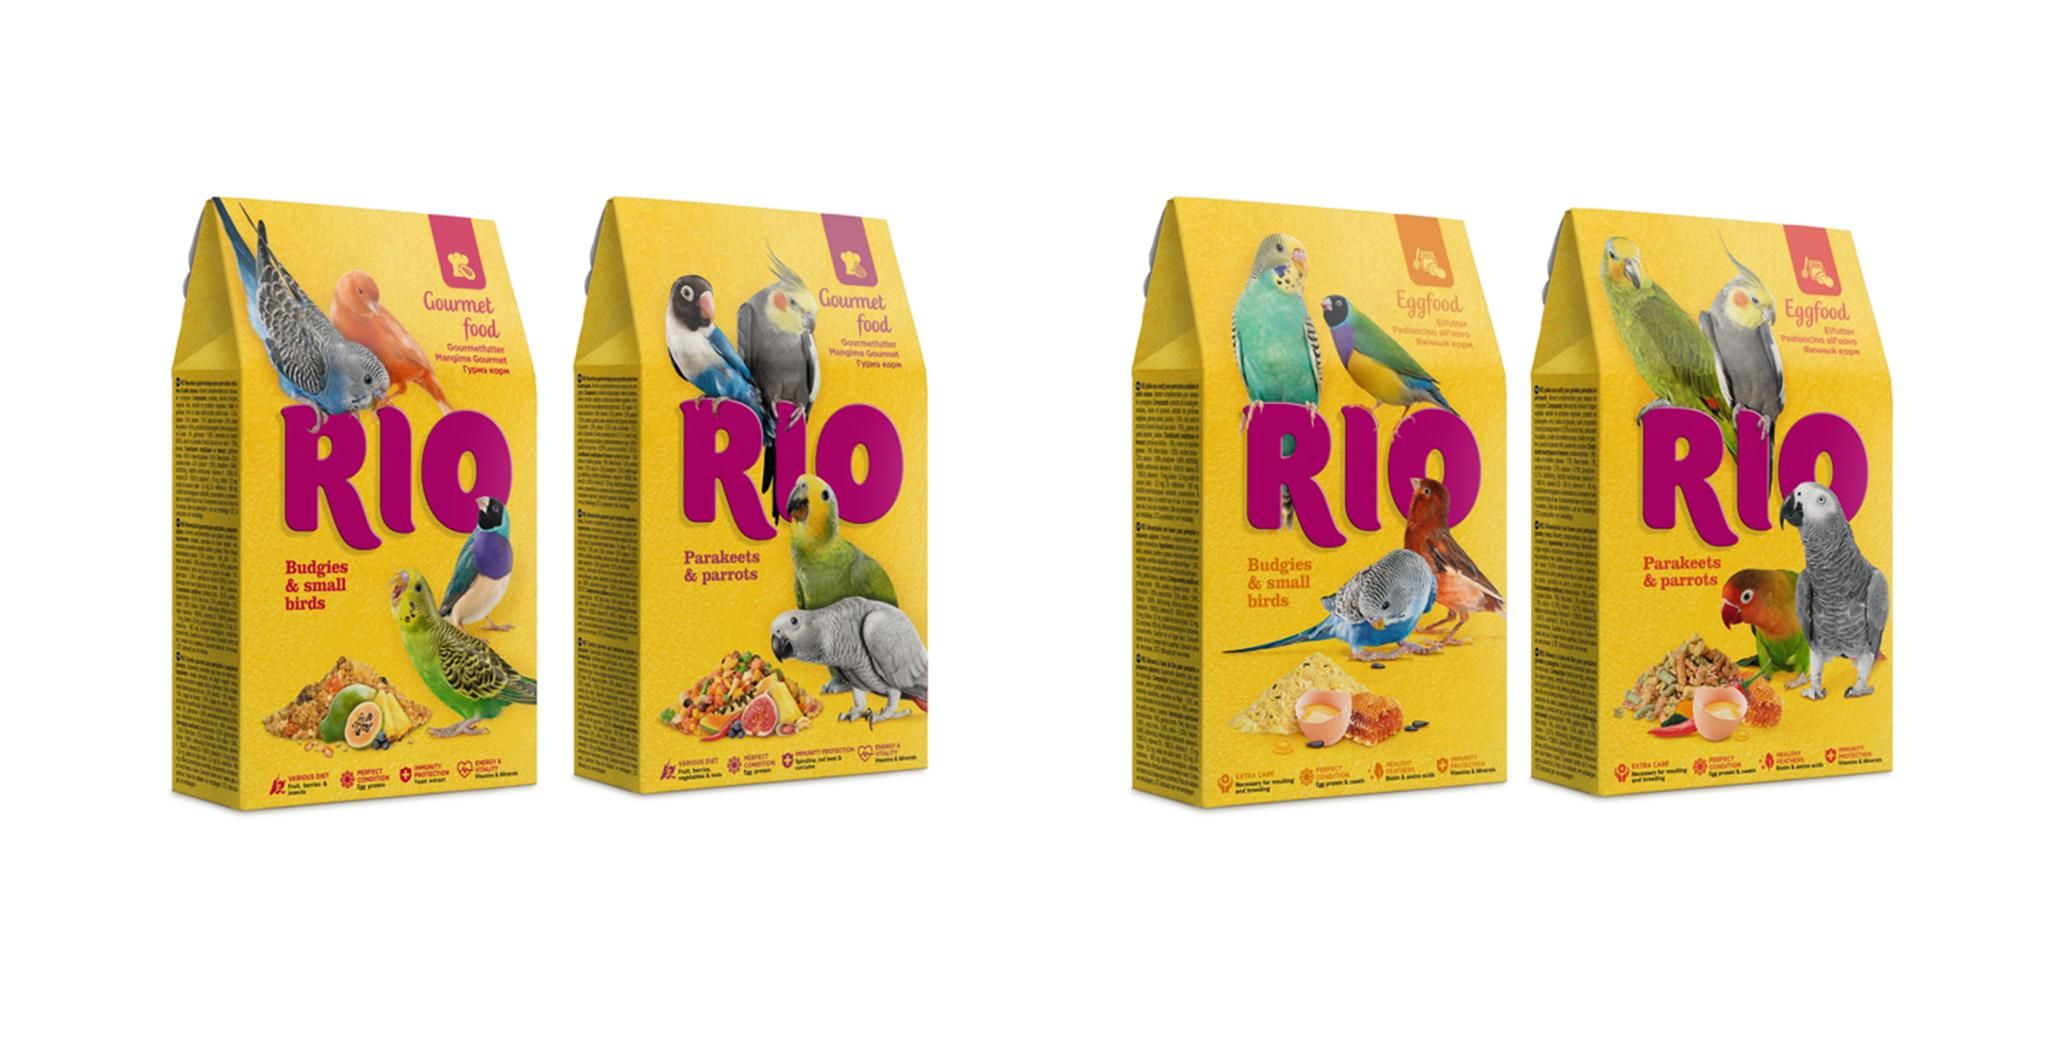 New generation of RIO Eggfood!